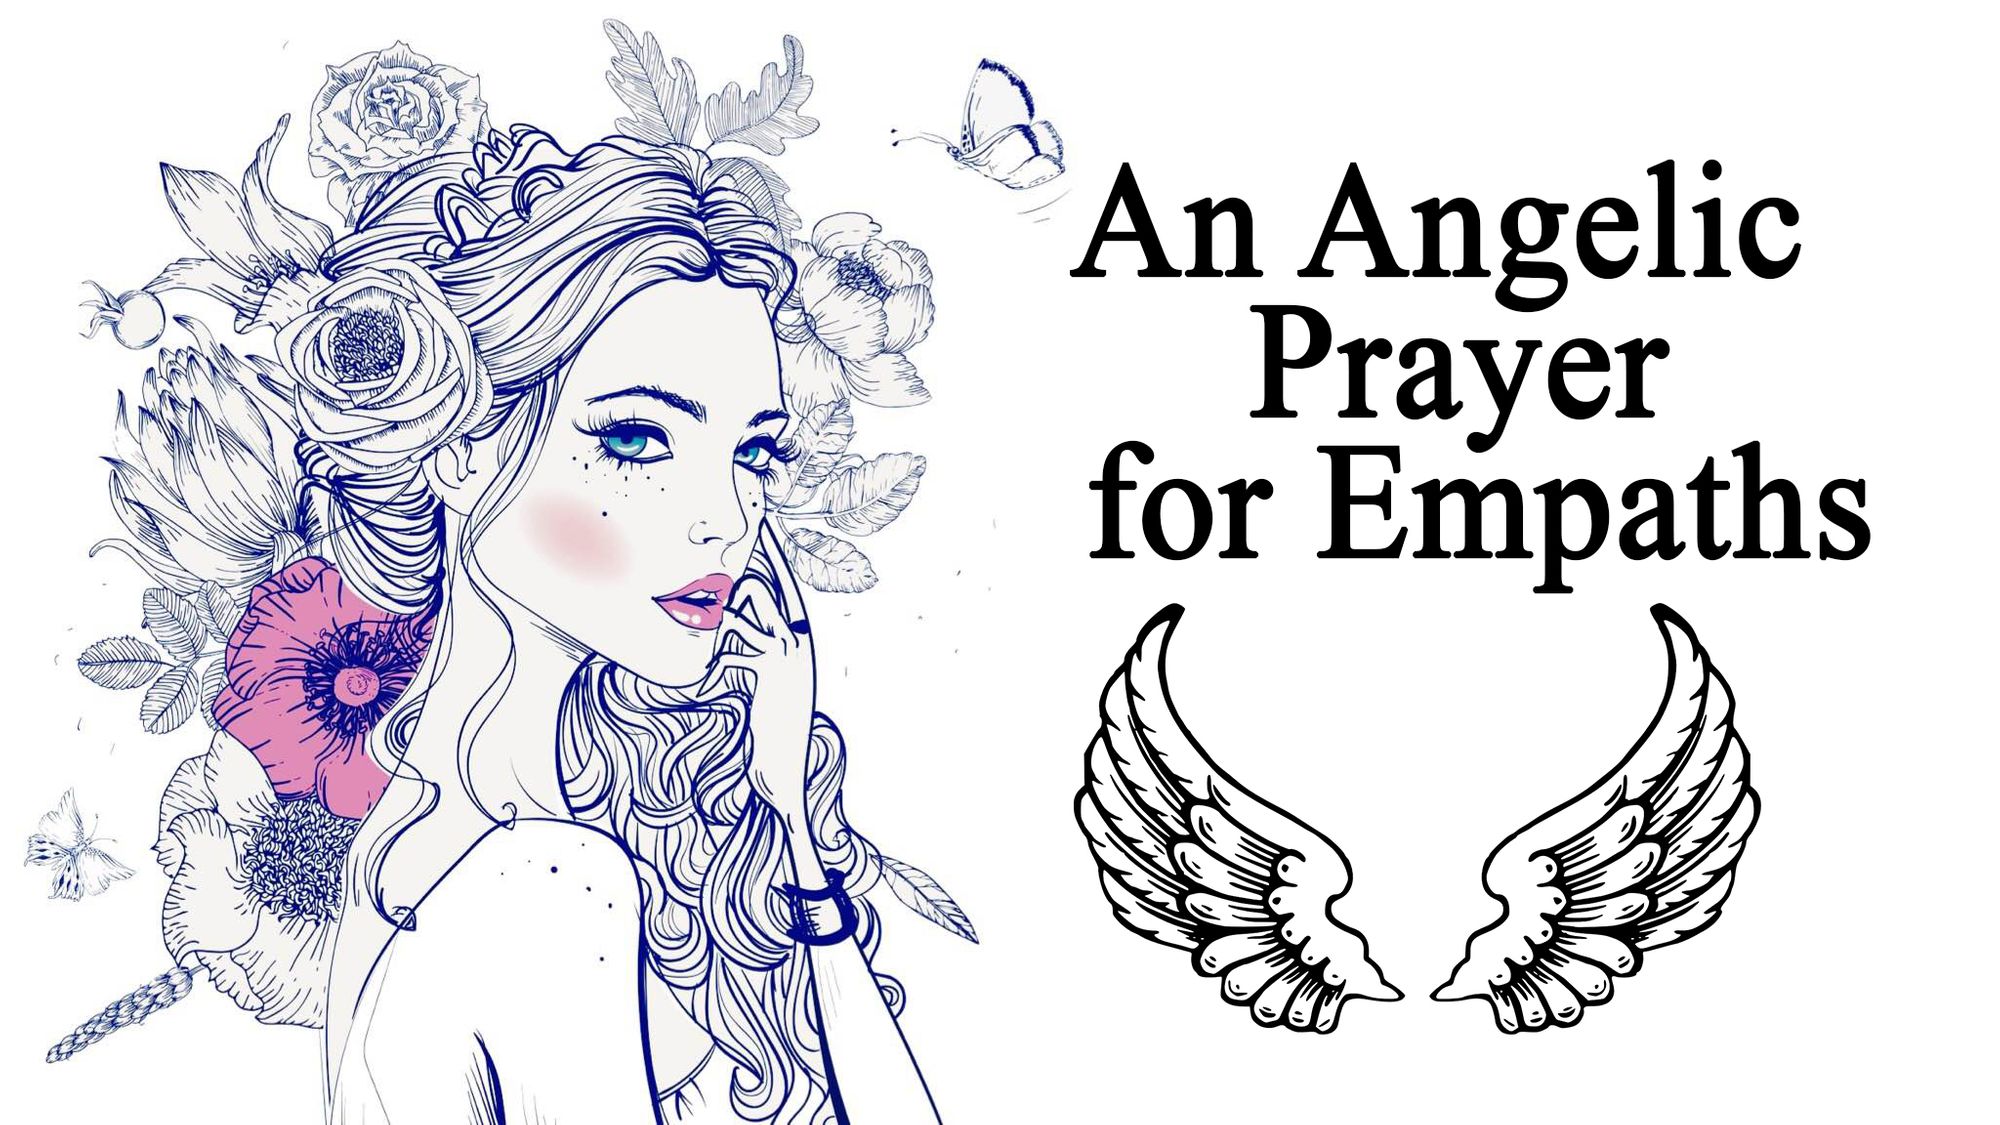 An Angelic Prayer for Empaths